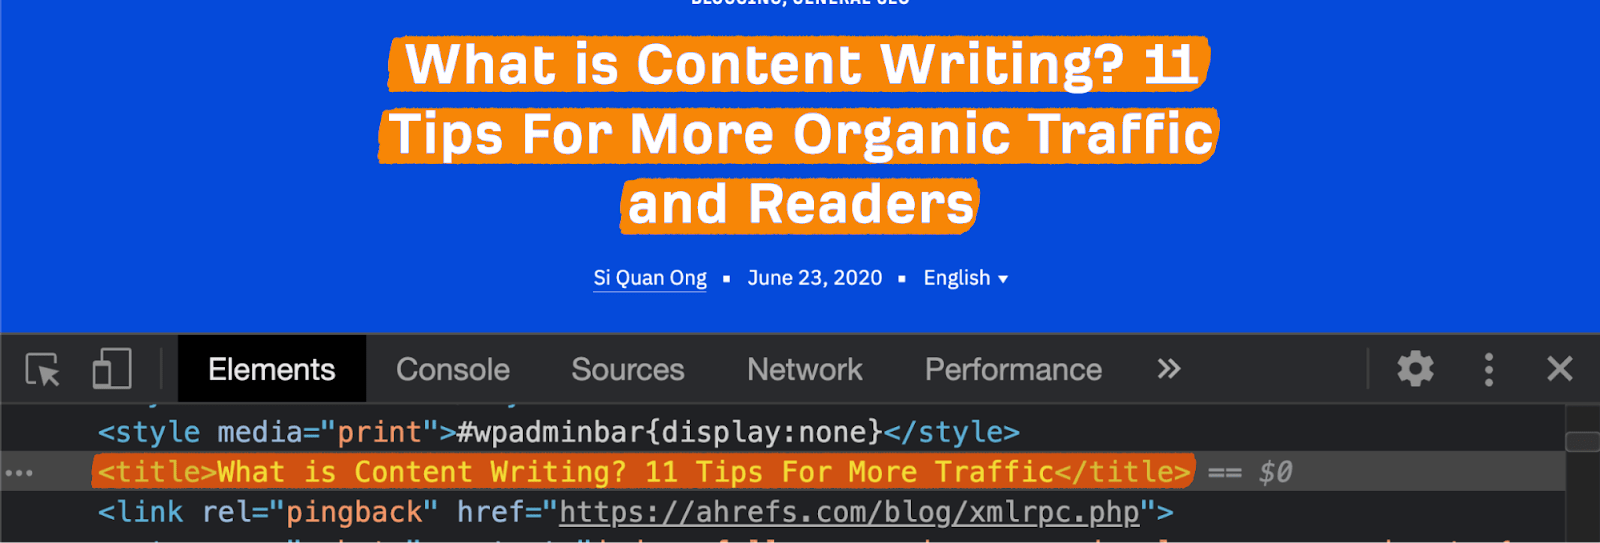 write blog articles